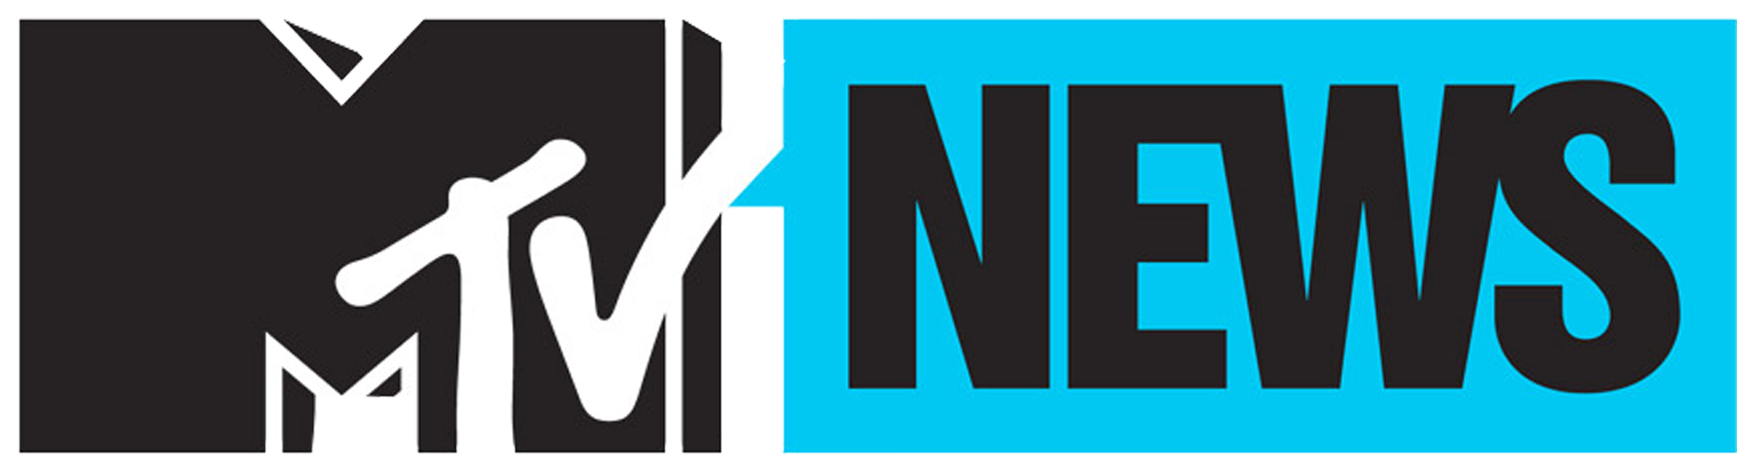 Mtv News Logo Png - Yoostar On Mtv [xbox 360 Game] (2000x1108), Png Download